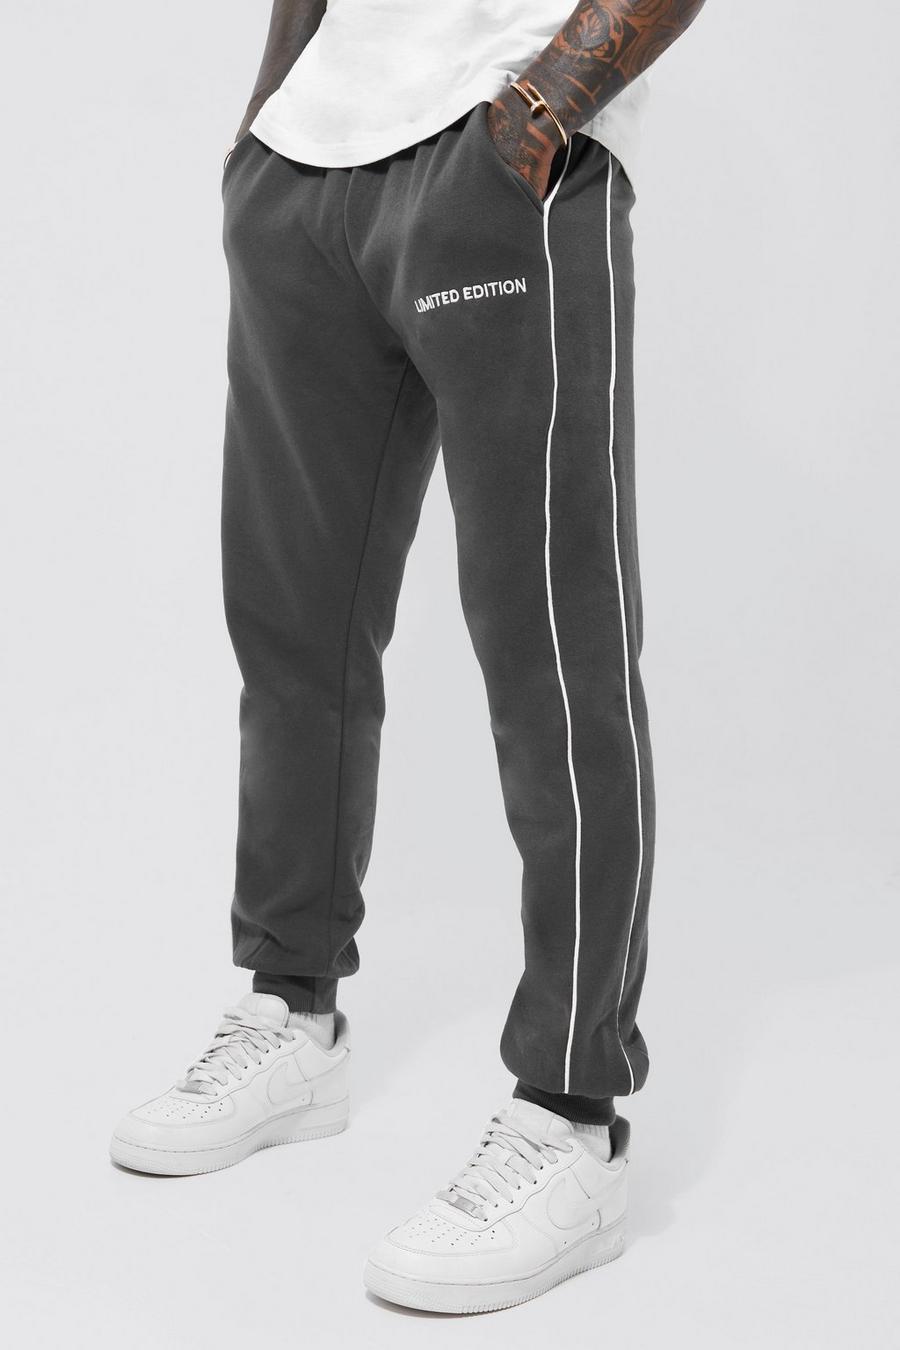 Pantaloni tuta Slim Fit Limited con cordoncino, Charcoal grey